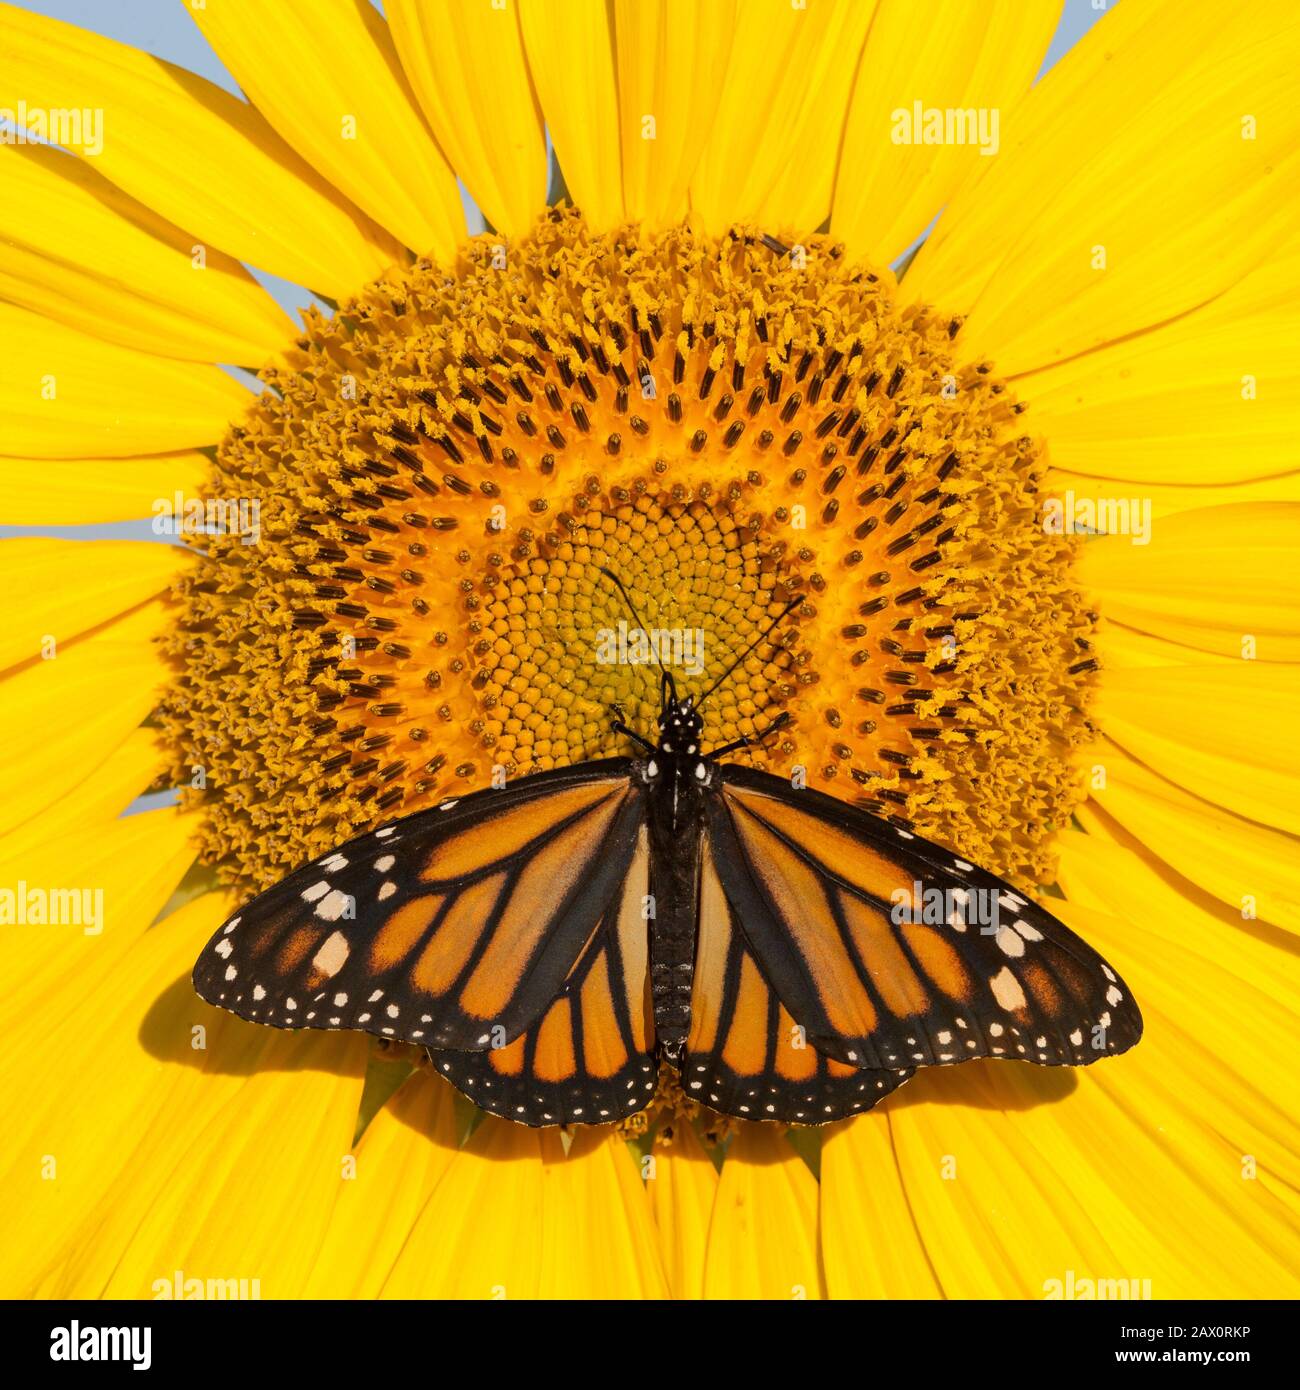 Monarch butterfly nectaring on sunflower in full bloom. Pennsylvania, summer. Stock Photo